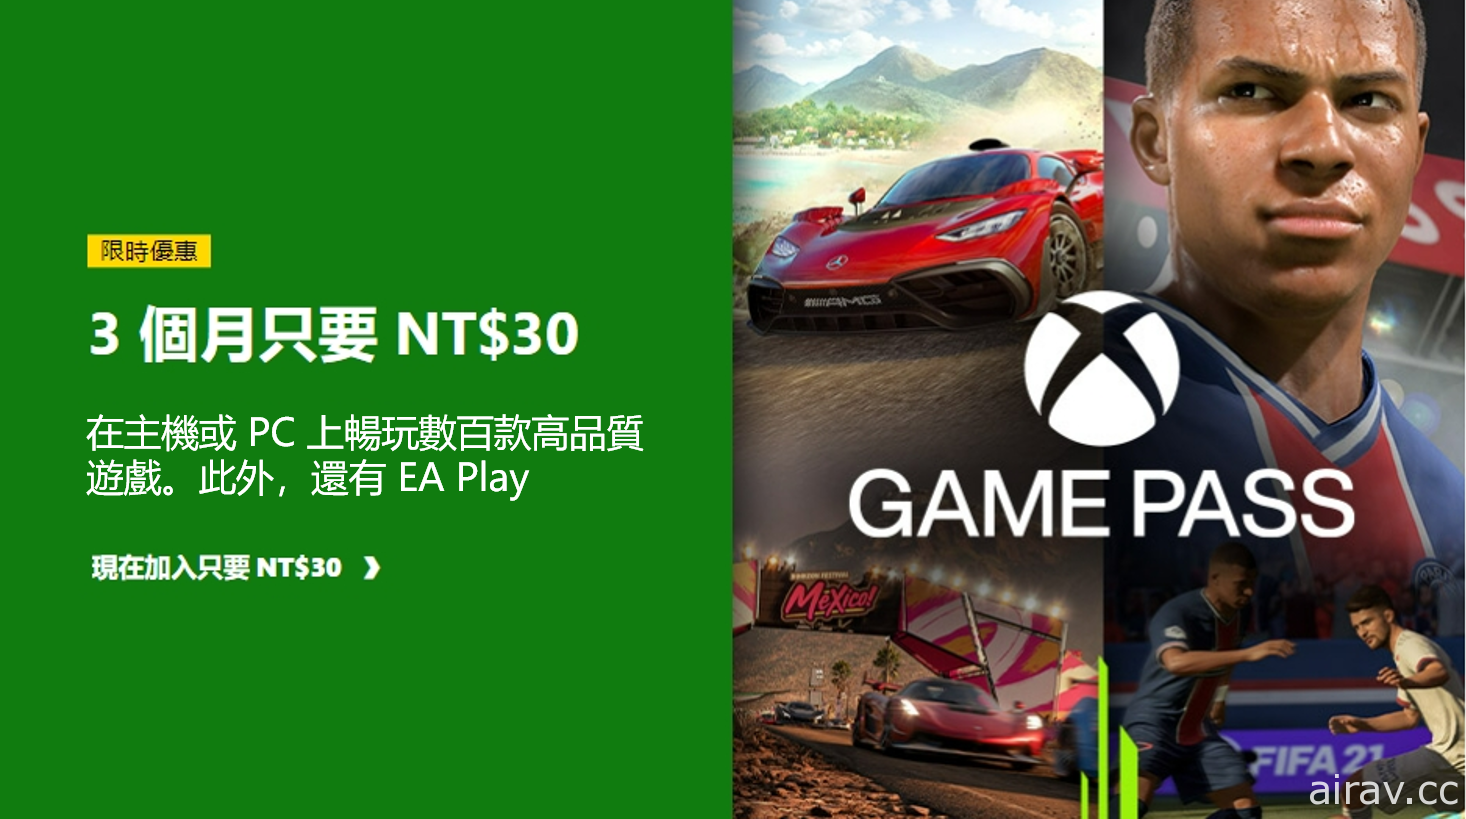 Xbox 釋出夏季新消息 Game Pass 6 月陣容與限時優惠大公開